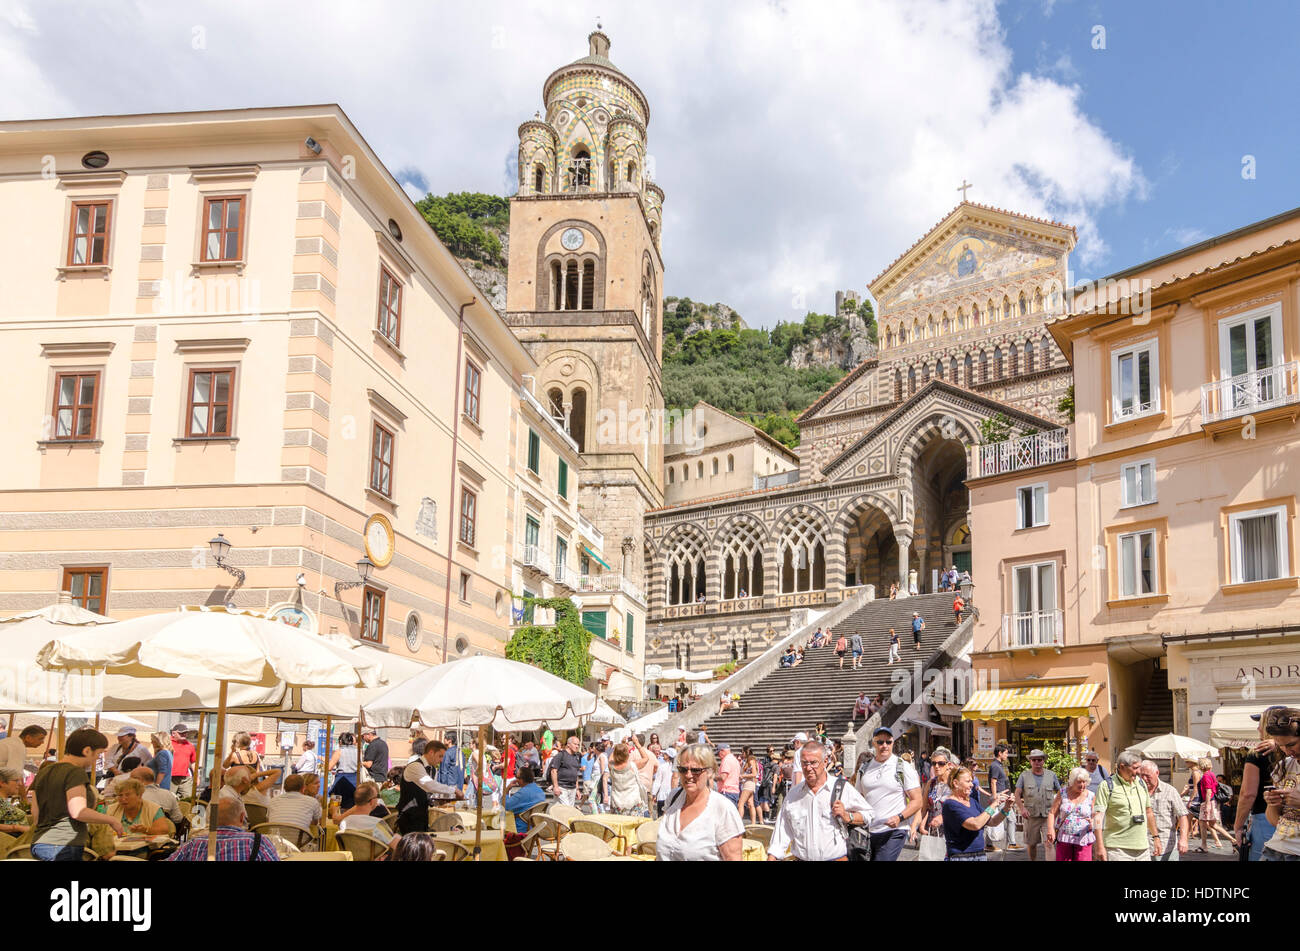 Amalfi Cathedral, Duomo di Amalfi. Tourists and visitors at the historic tourist attraction on the Amalfi Coast, Italy Stock Photo